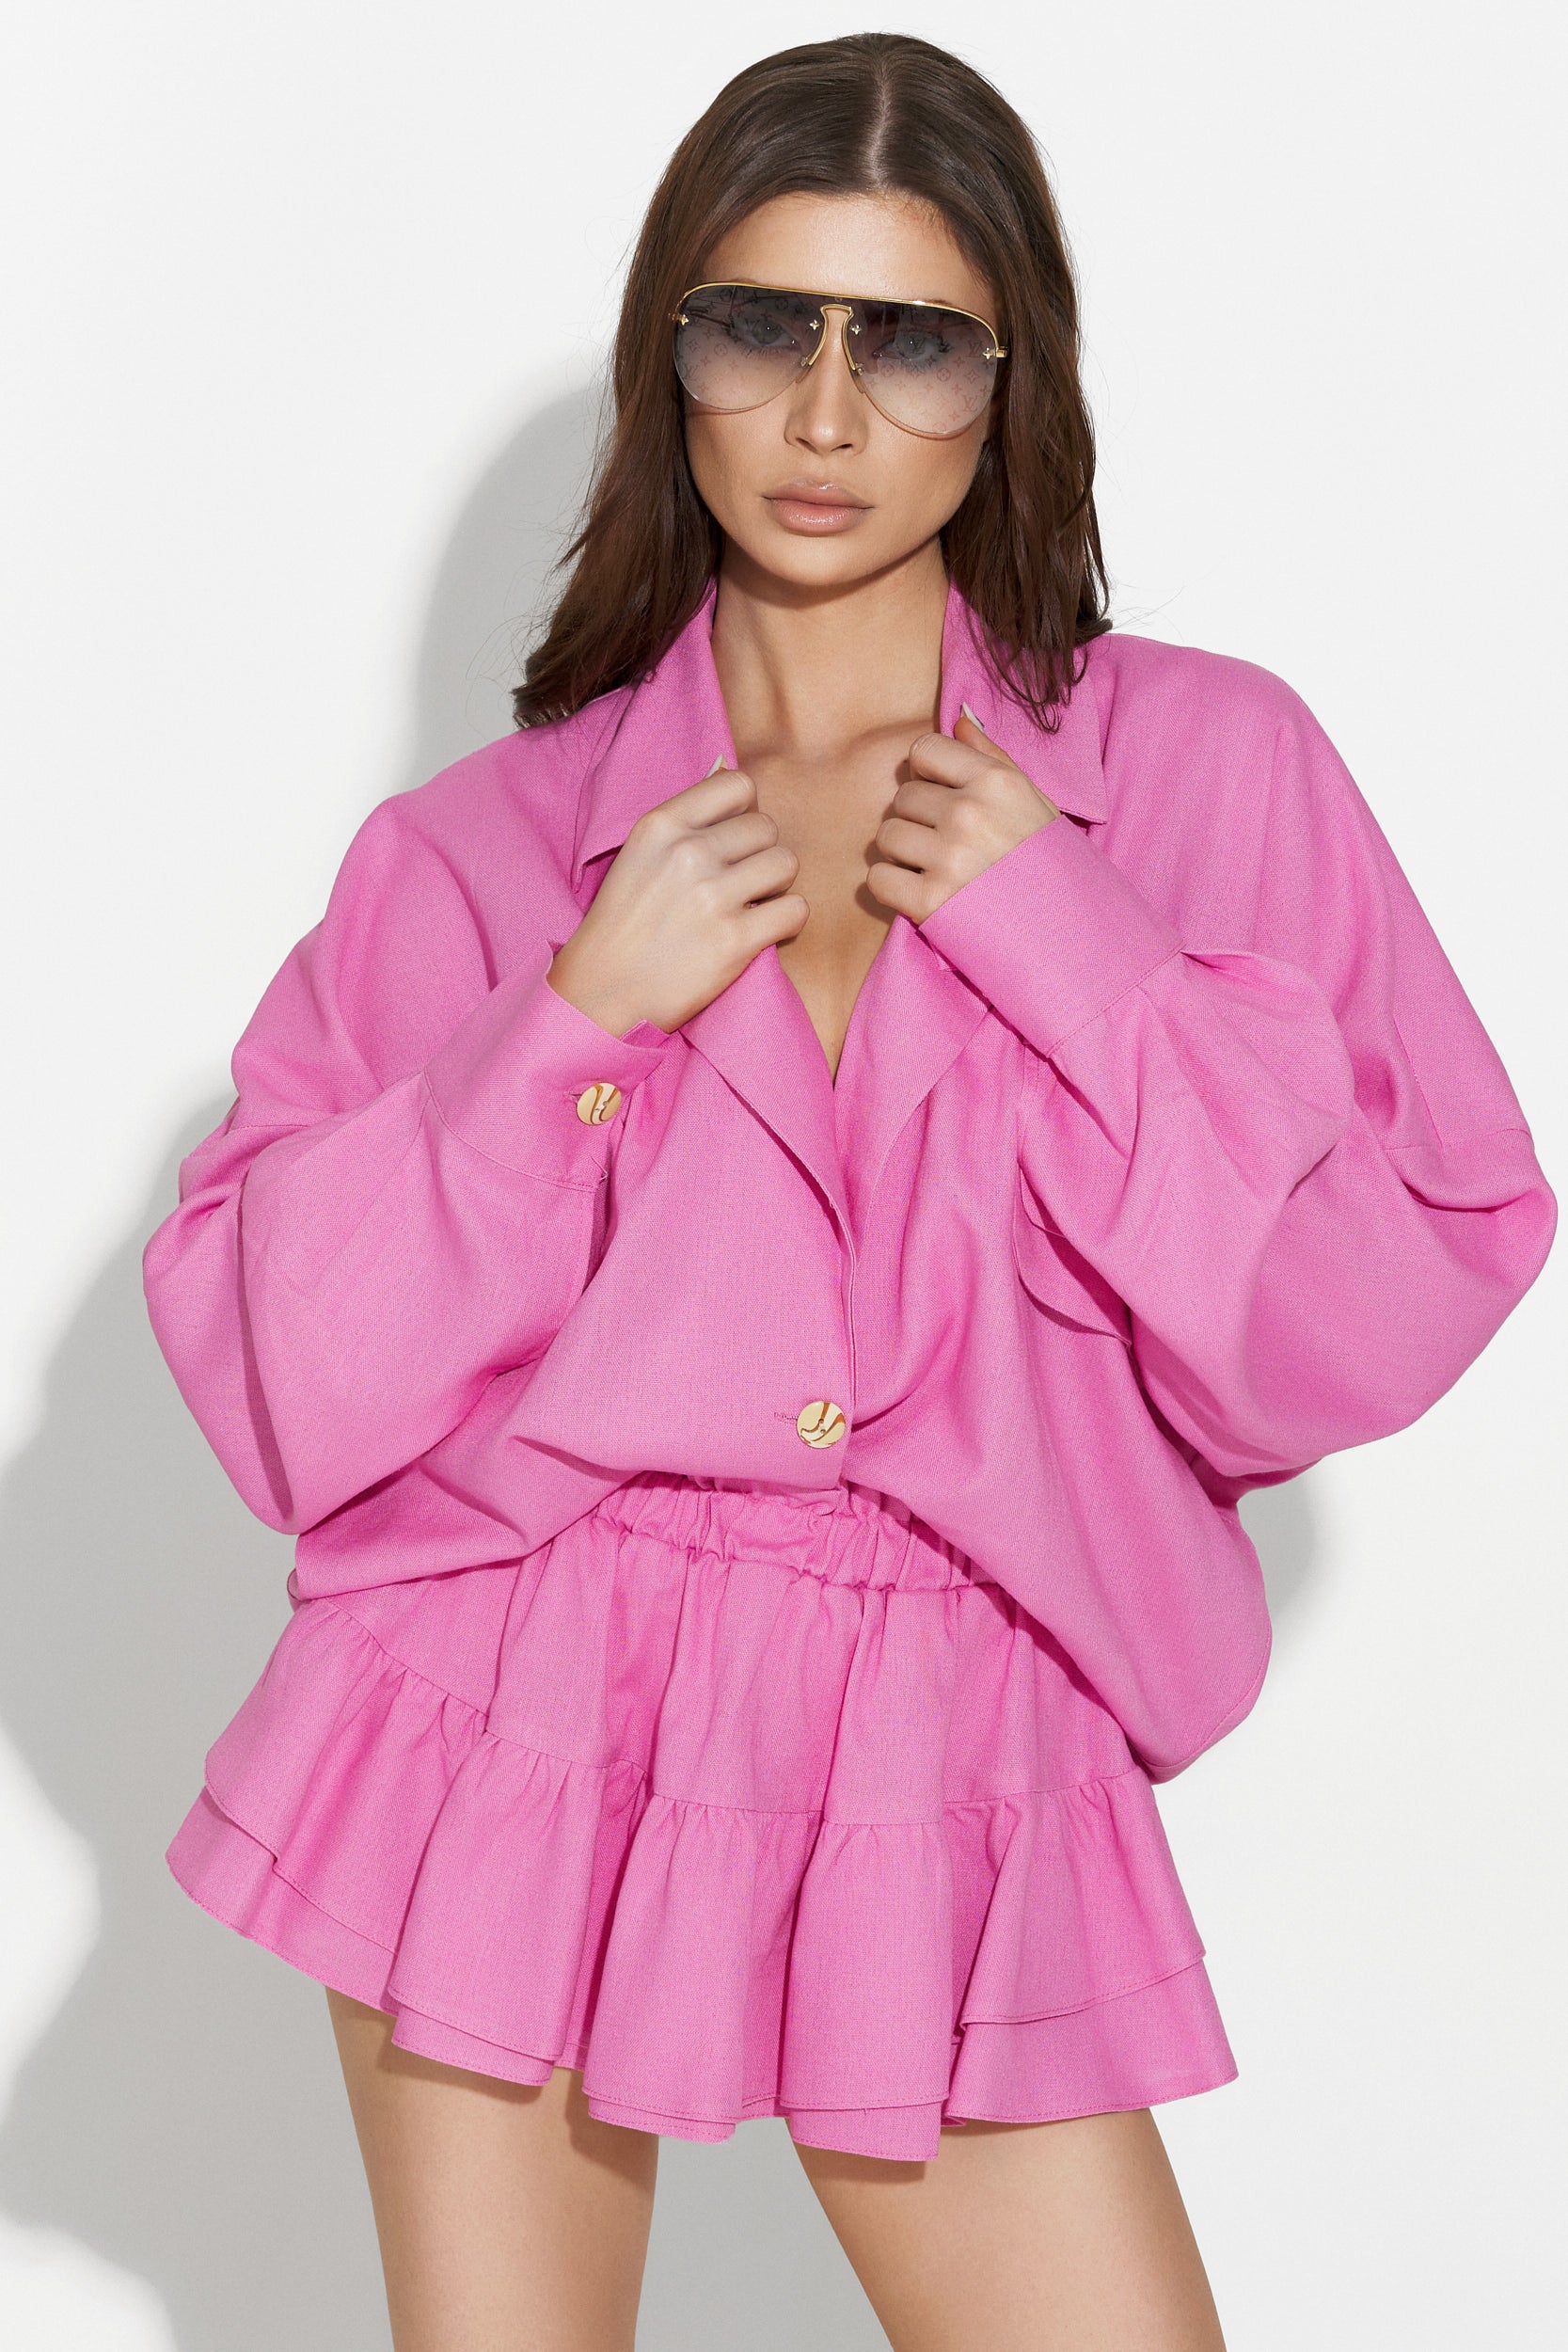 Bestiny Bogas Pink Casual Ladies Skirt Suit